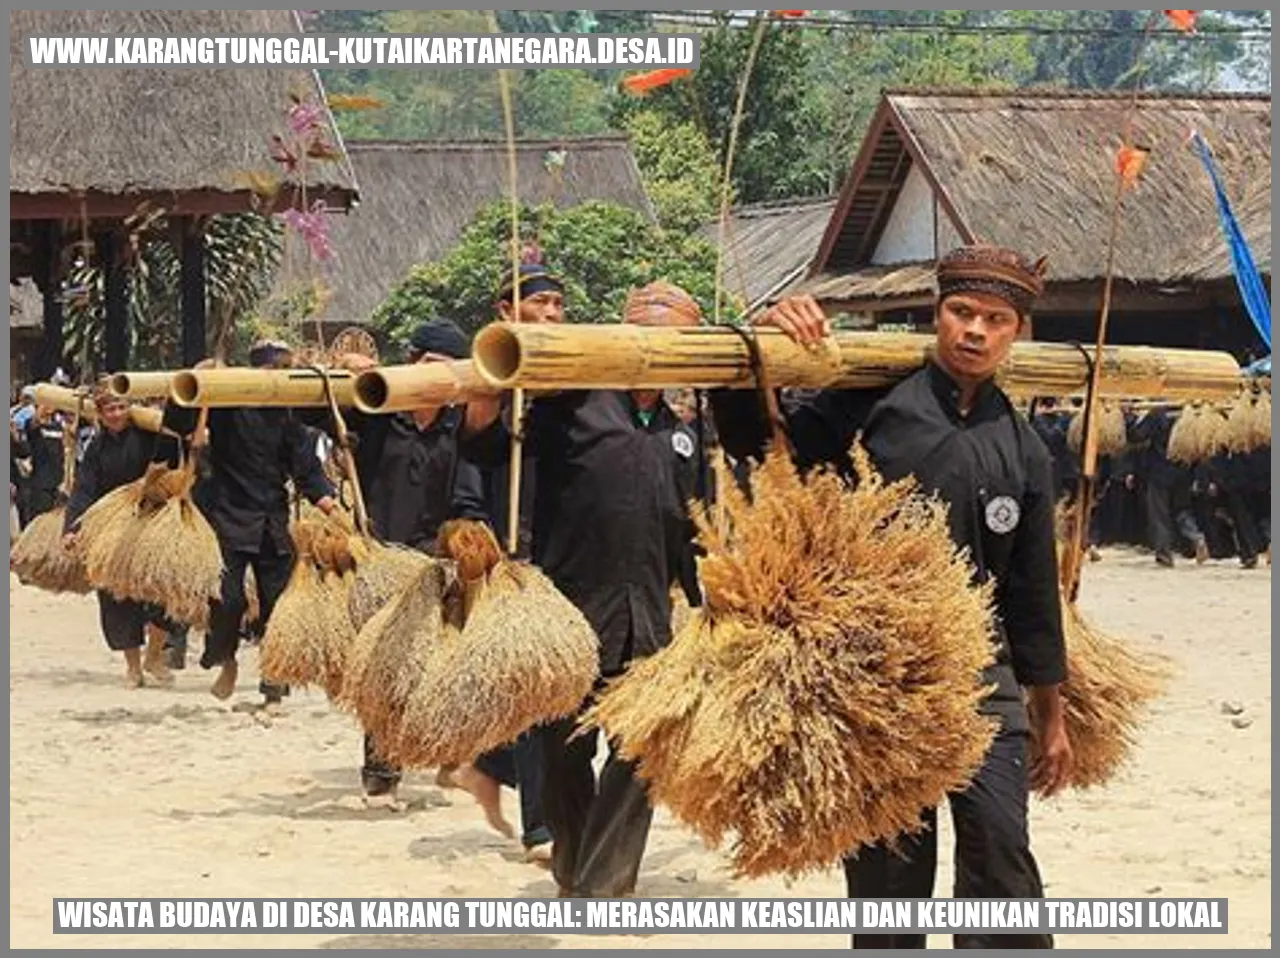 Wisata Budaya di Desa Karang Tunggal: Merasakan Keaslian dan Keunikan Tradisi Lokal